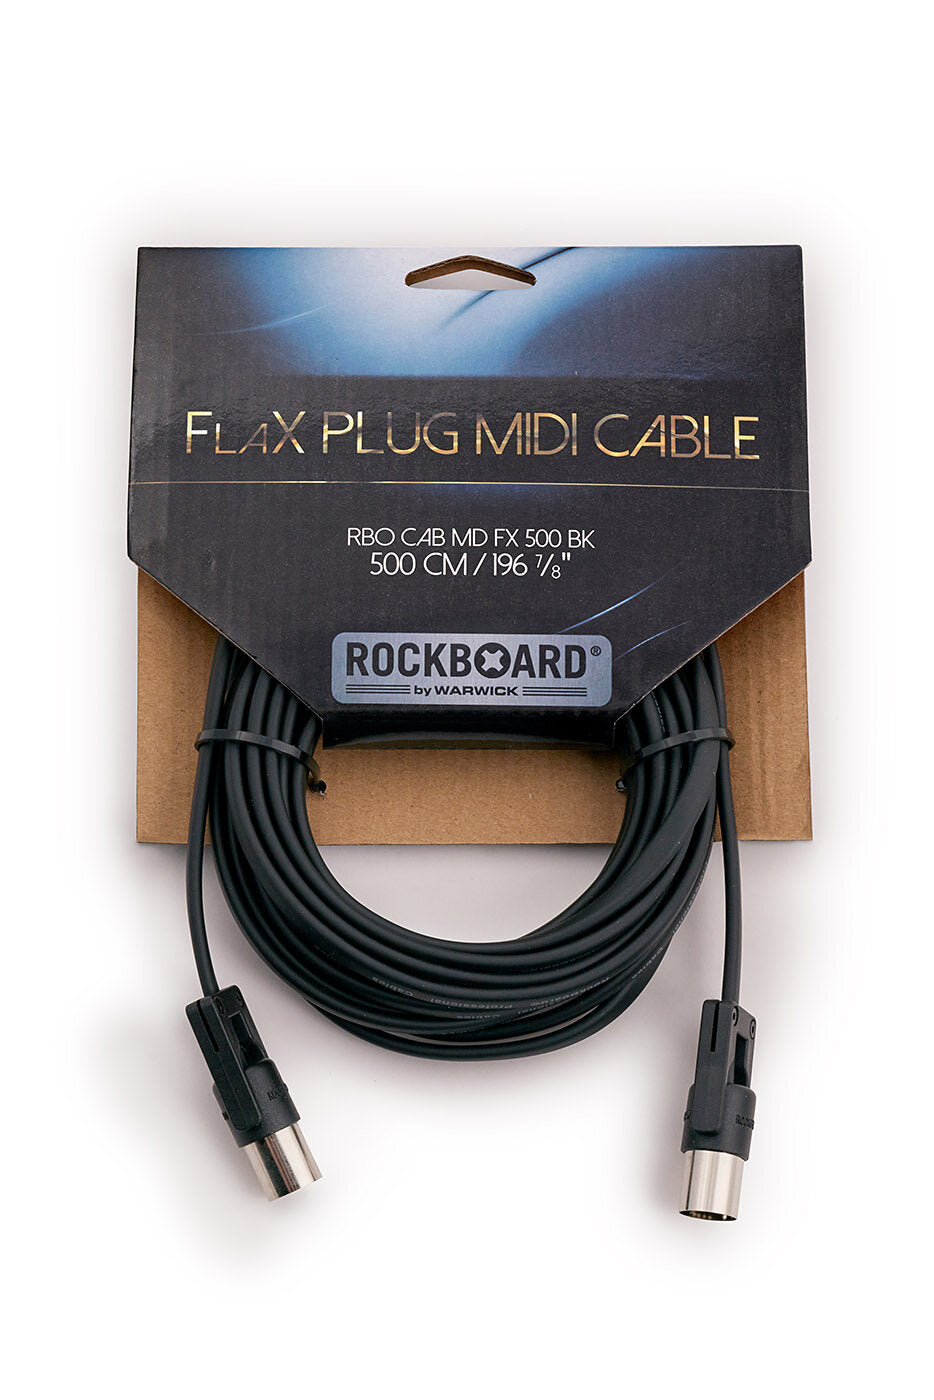 Câble MIDI RockBoard FlaX Plug, 500 cm / 196 27/32